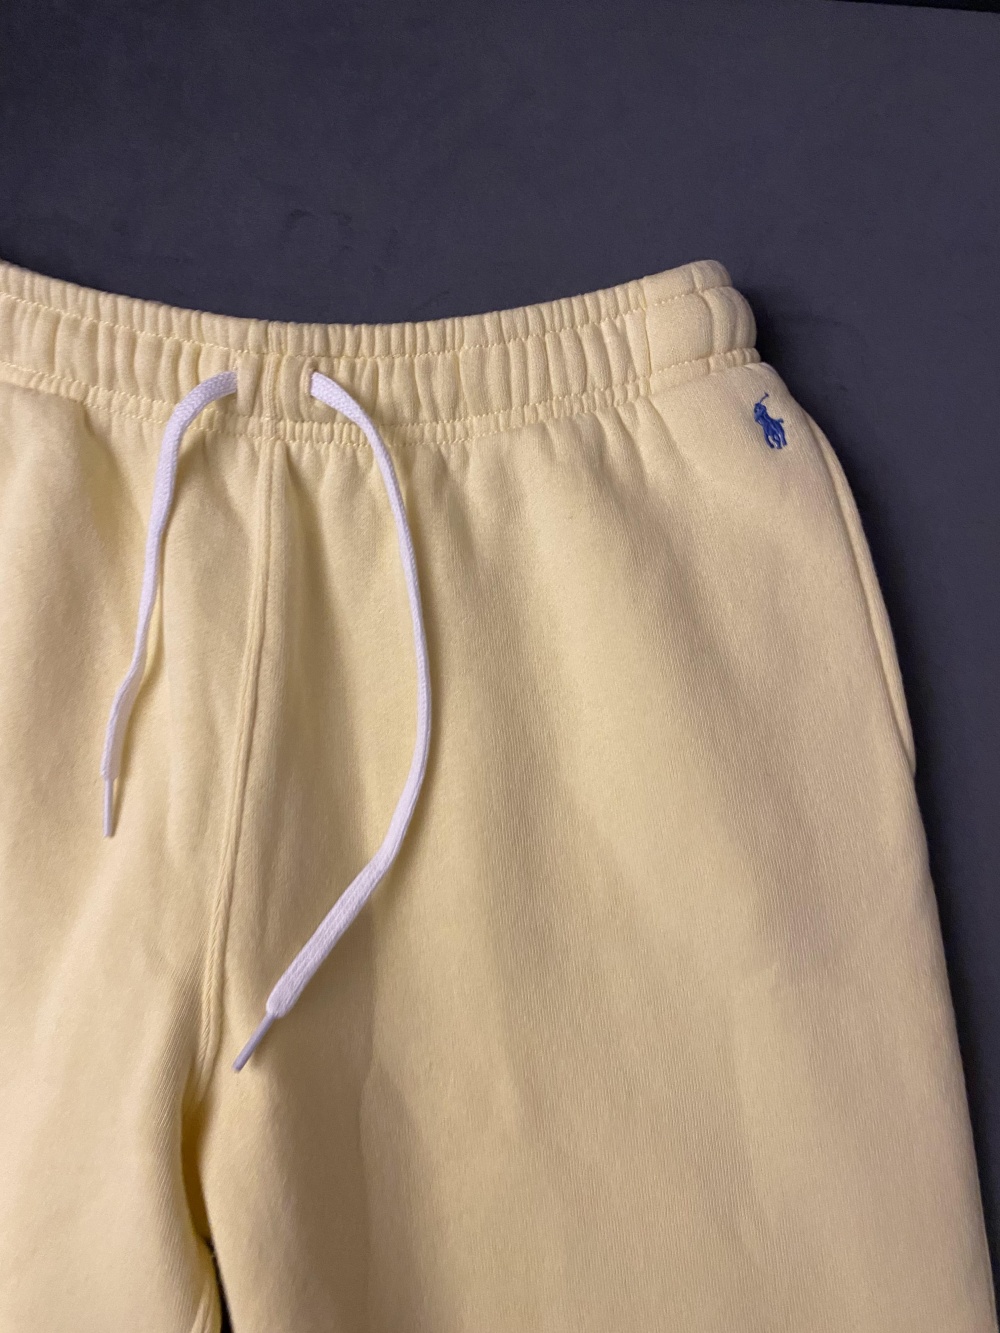 Спортивные штаны Polo Ralph Lauren, M.